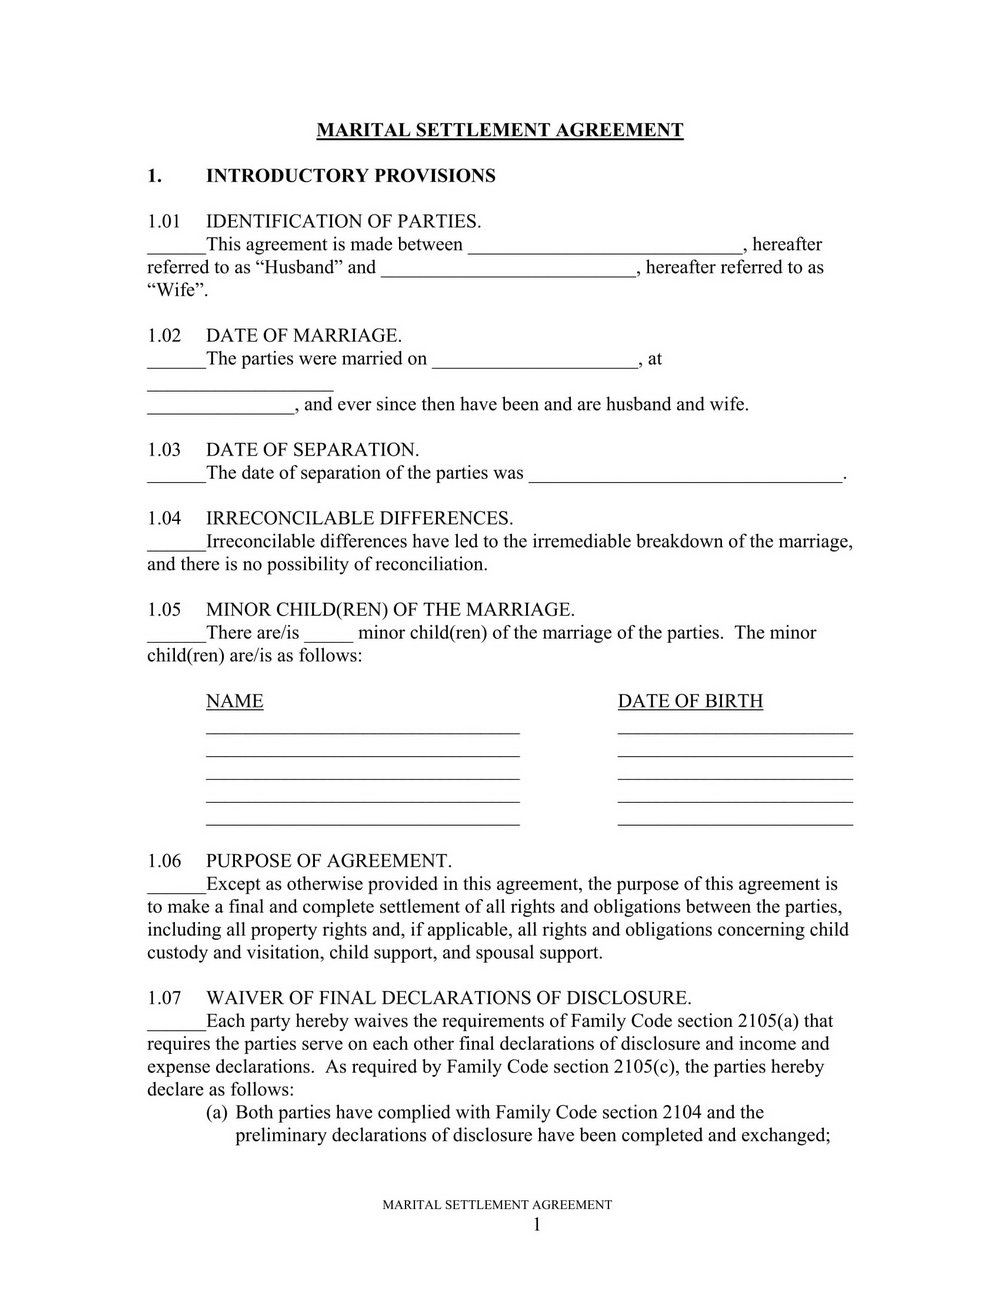 Marital Settlement Agreement Template Ohio – Templates In Marital Settlement Agreement Template